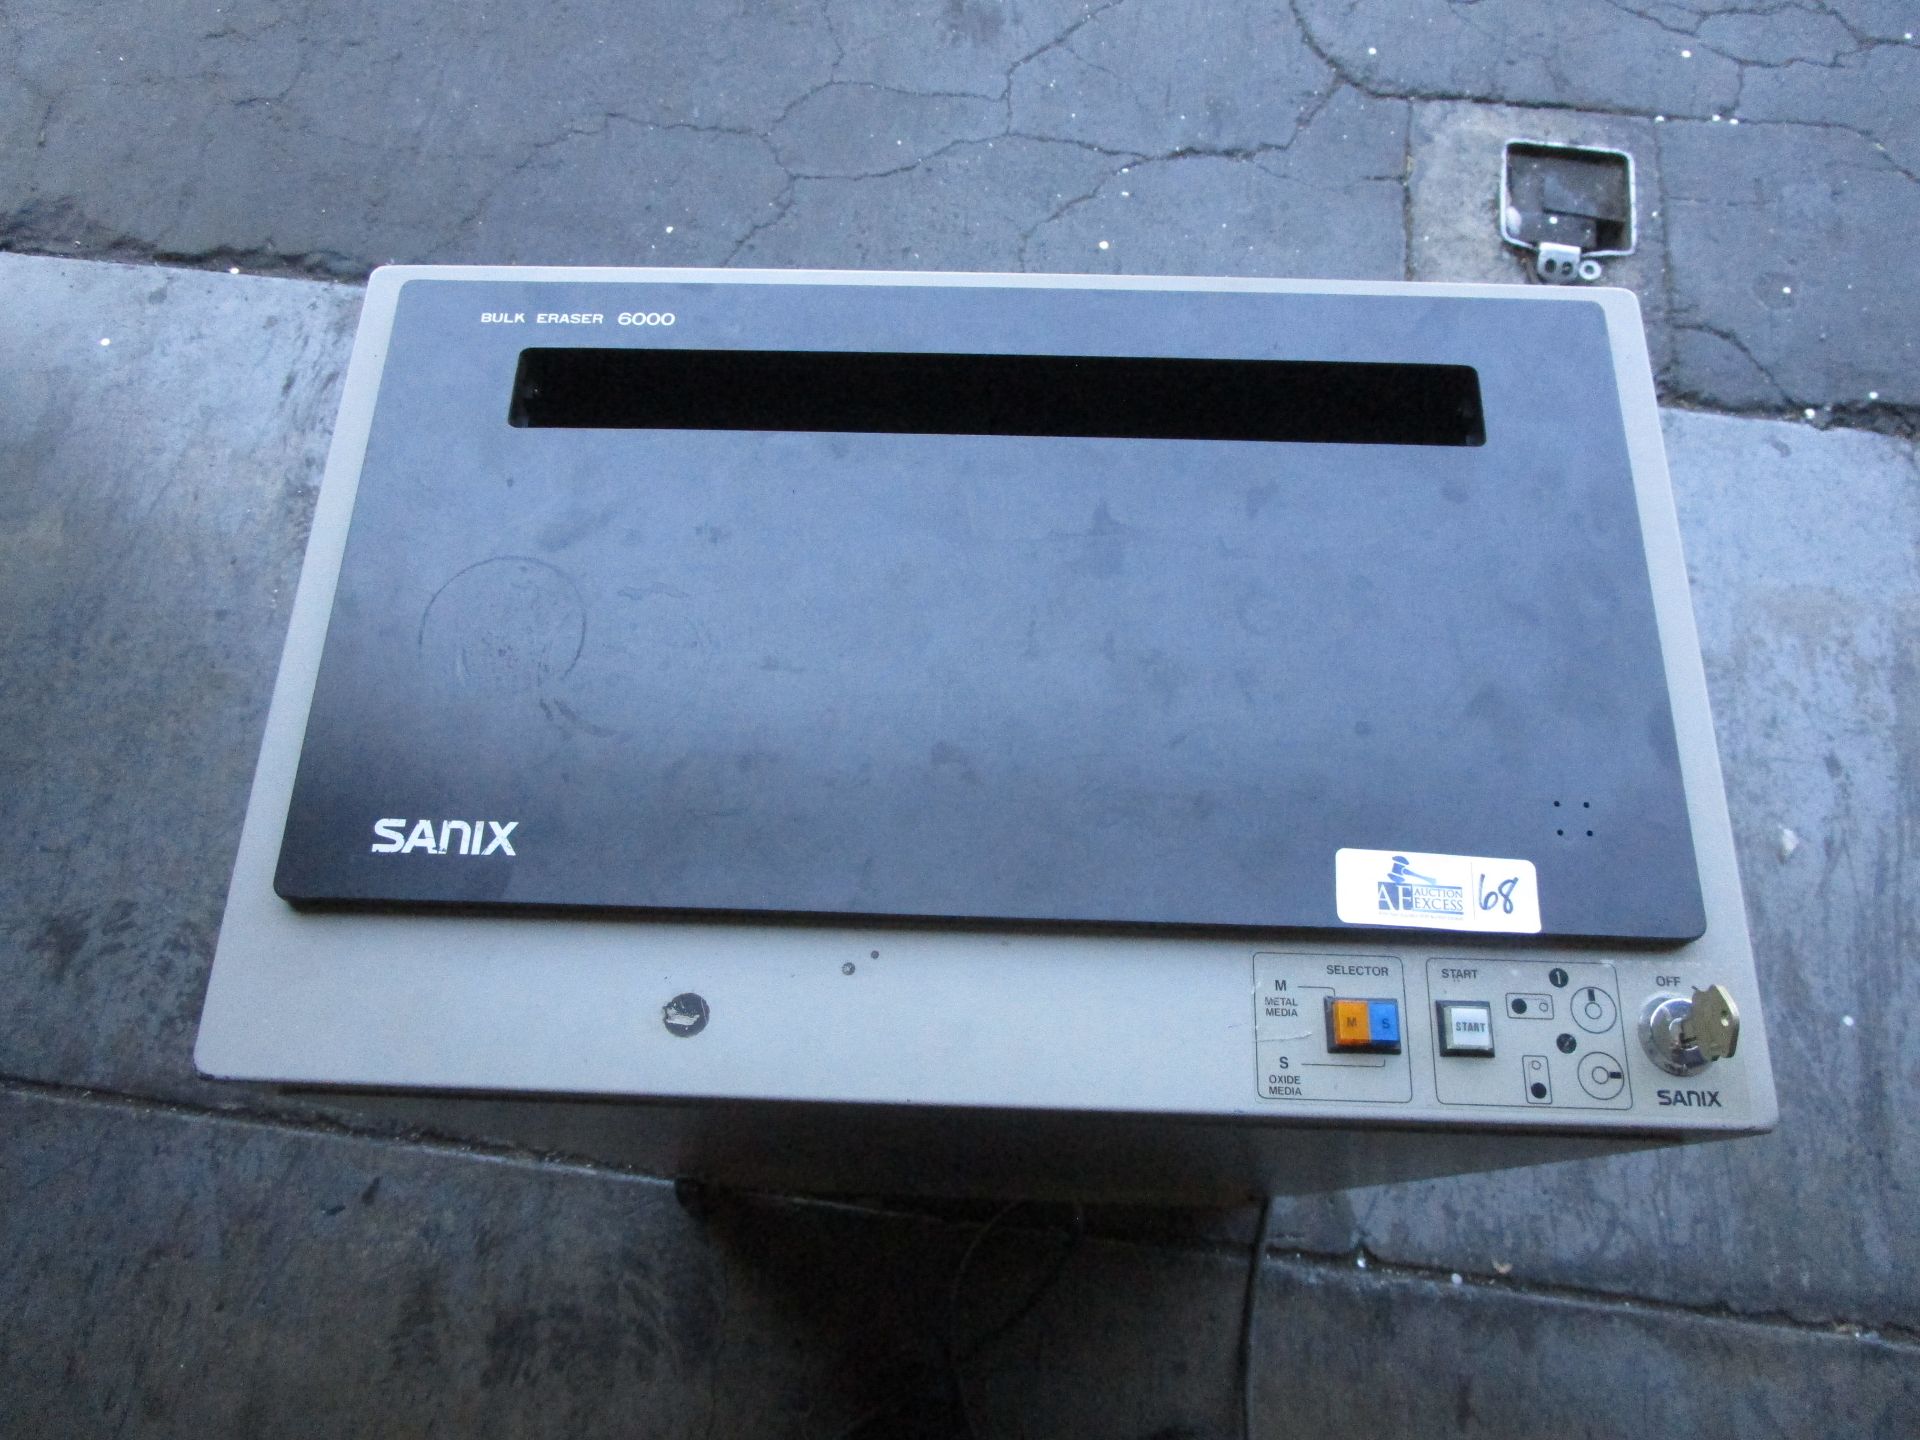 SANIX BULK ERASER 6000 - Image 3 of 4